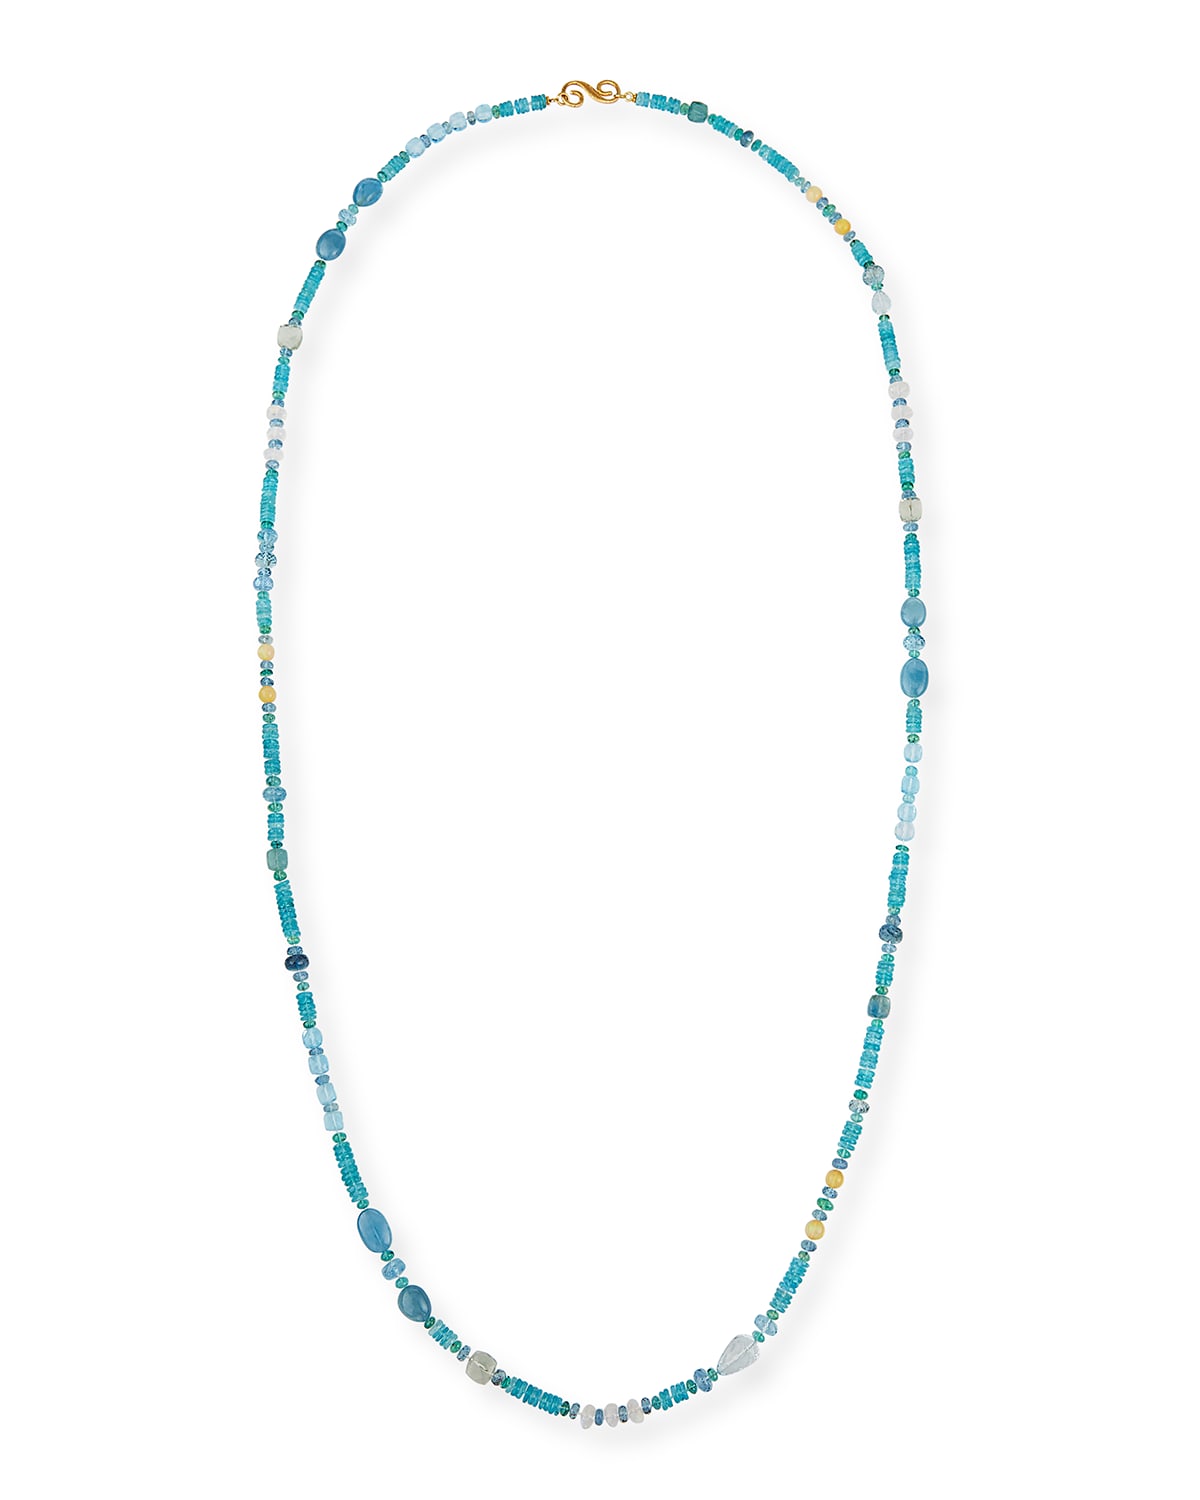 18k Bohemian Mixed-Stone Necklace, 48"L